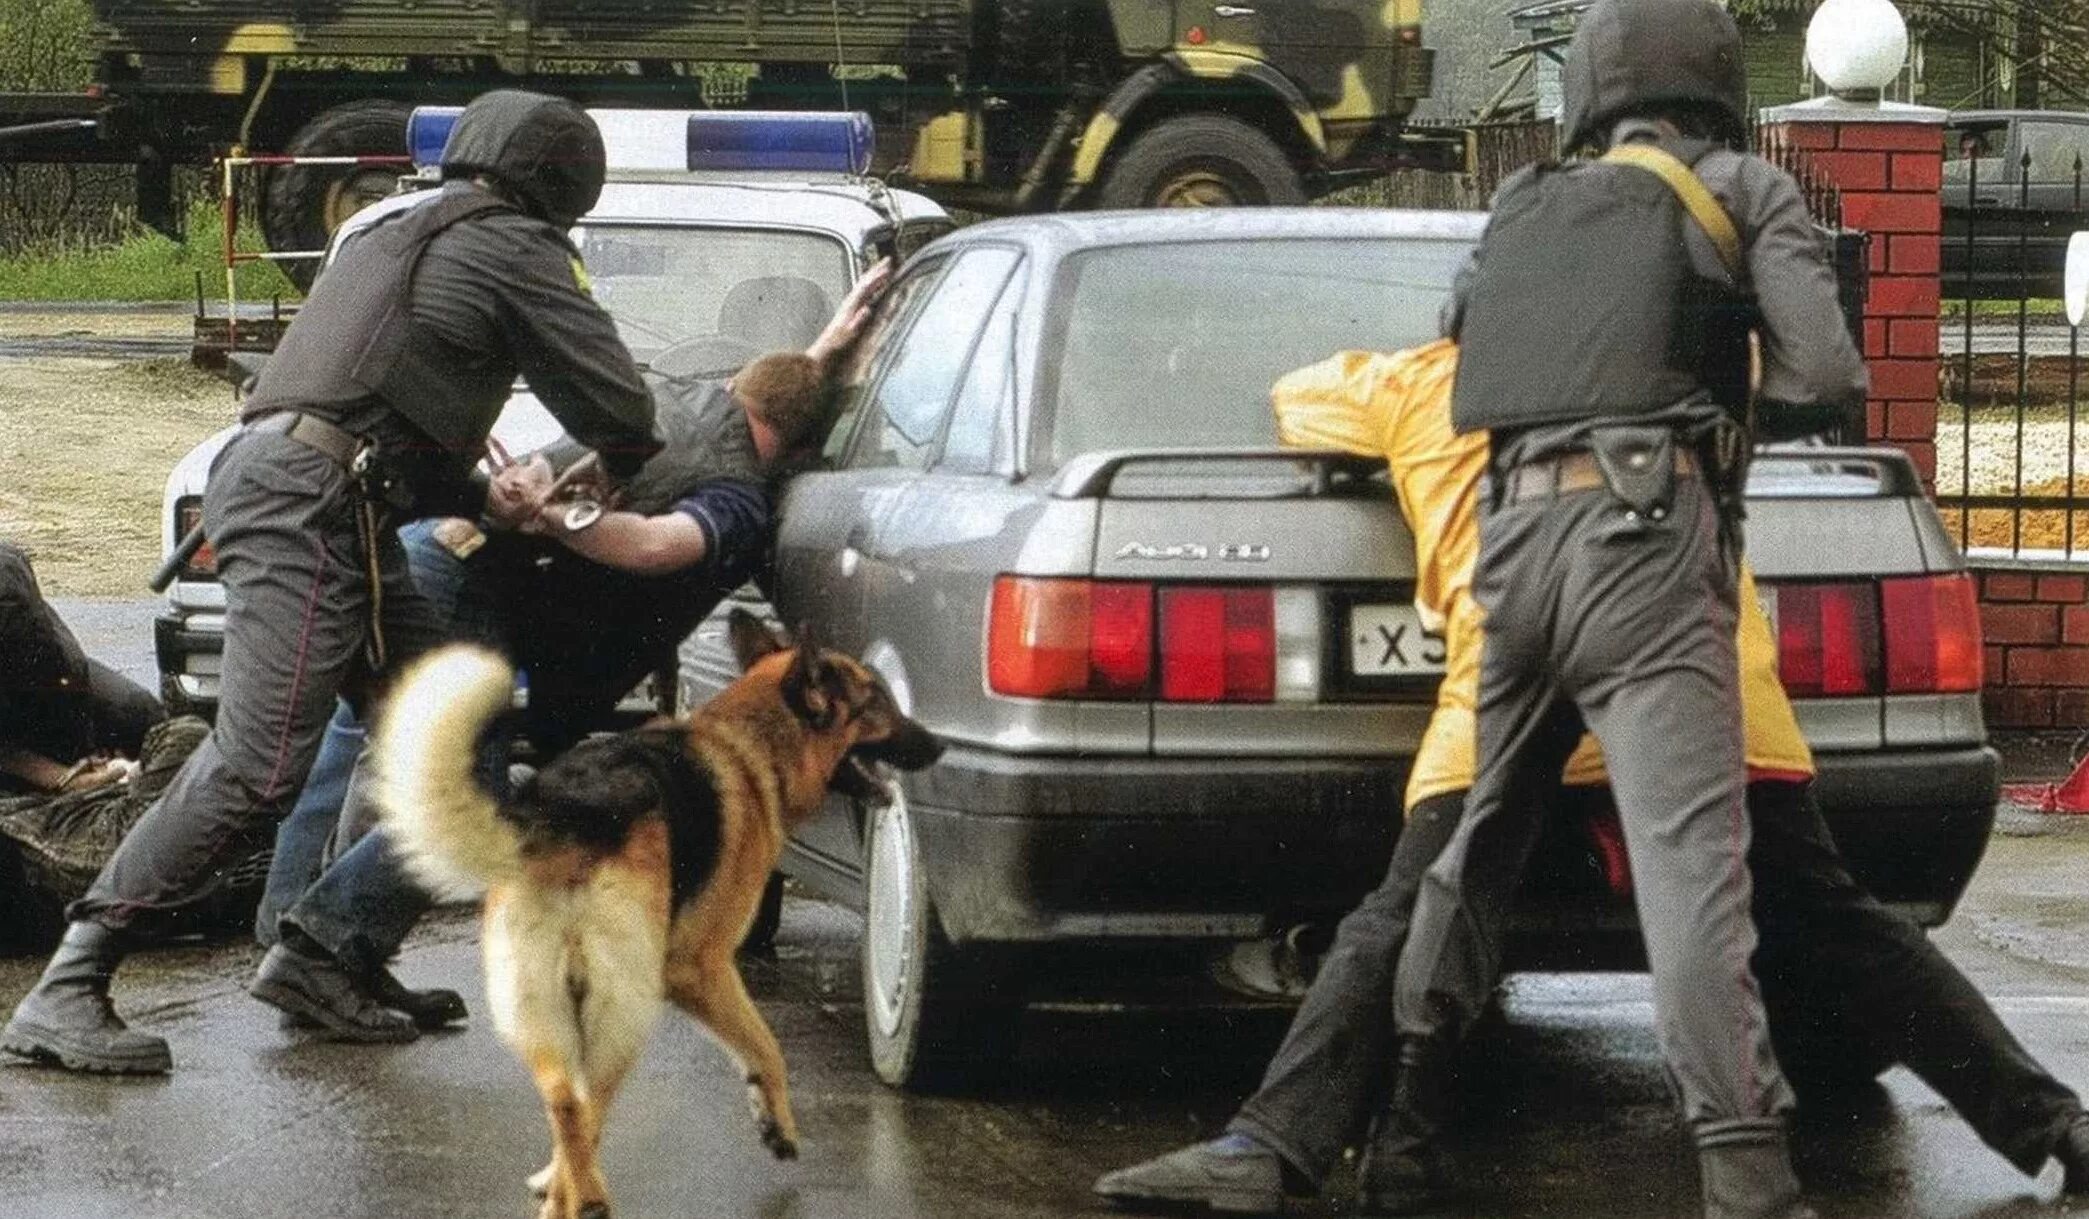 Полиция и преступники. Собаки в полиции. Милиция с собакой. Полицейский с собакой ловят преступника. В погоне за преступником